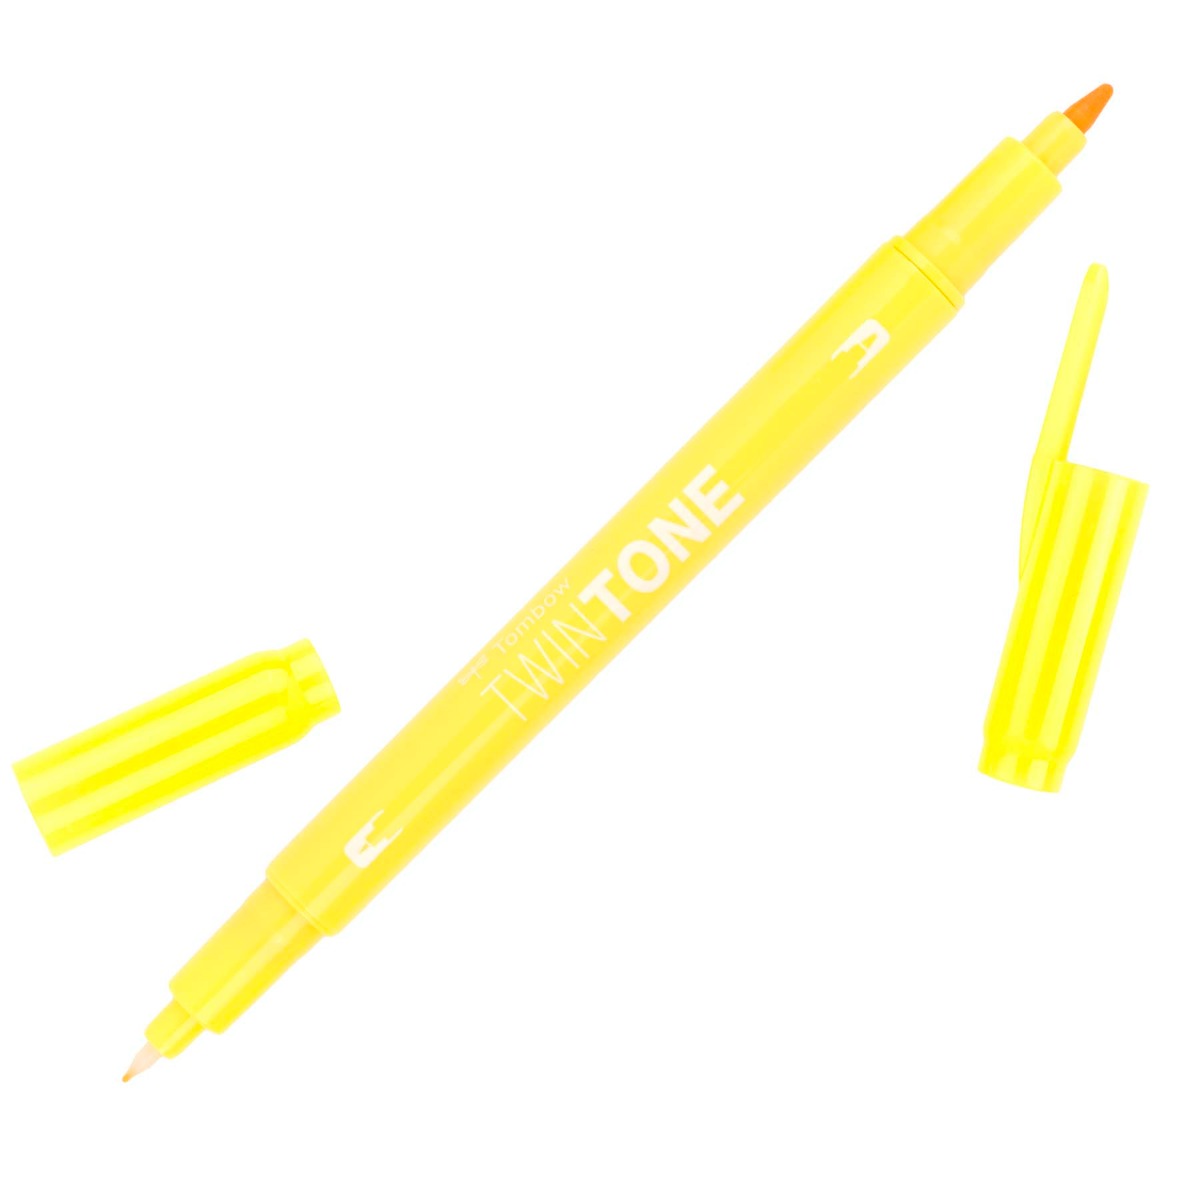 Tombow TwinTone Pens - Individual Pen